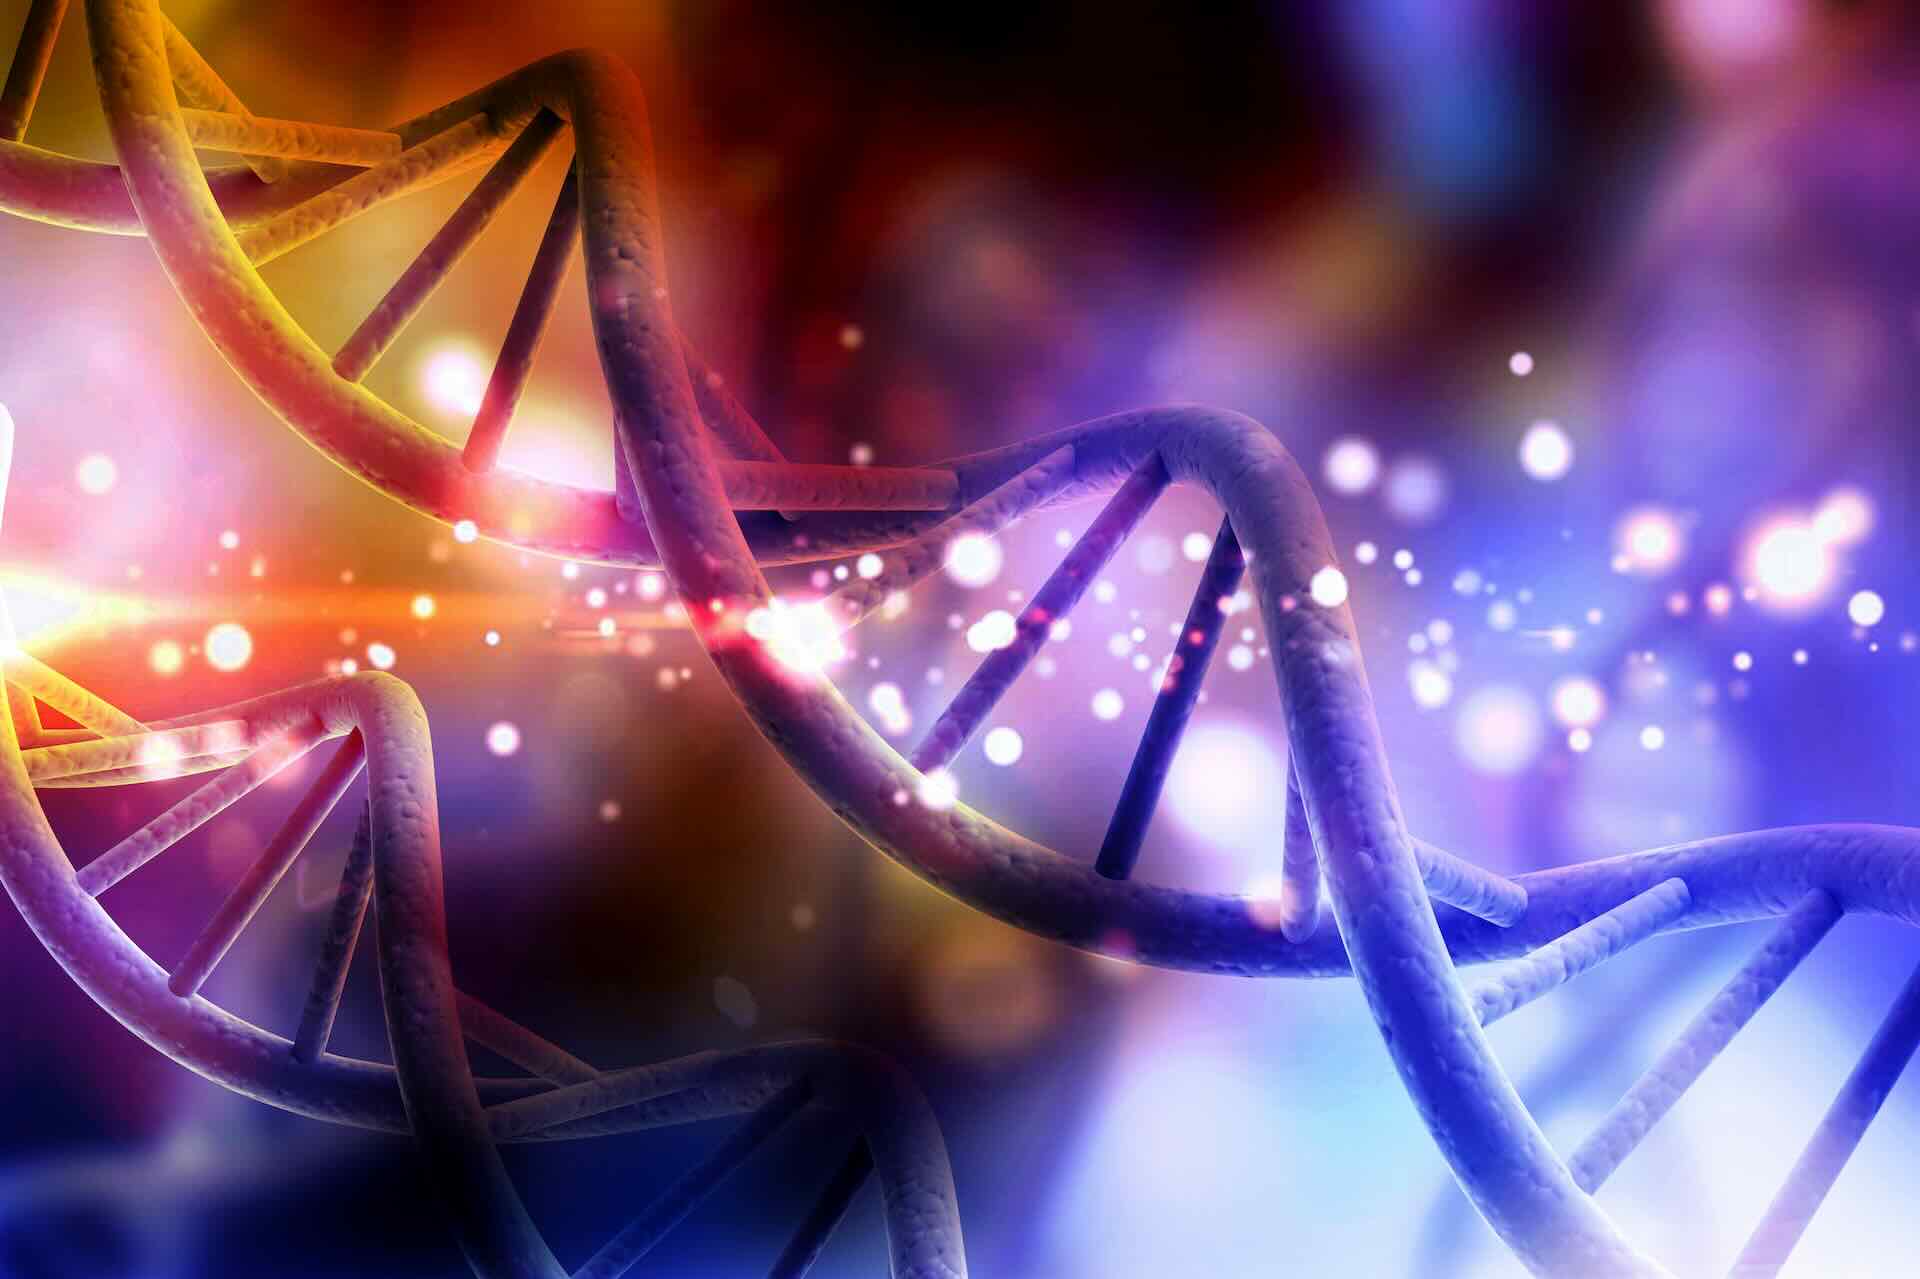 DNA humano